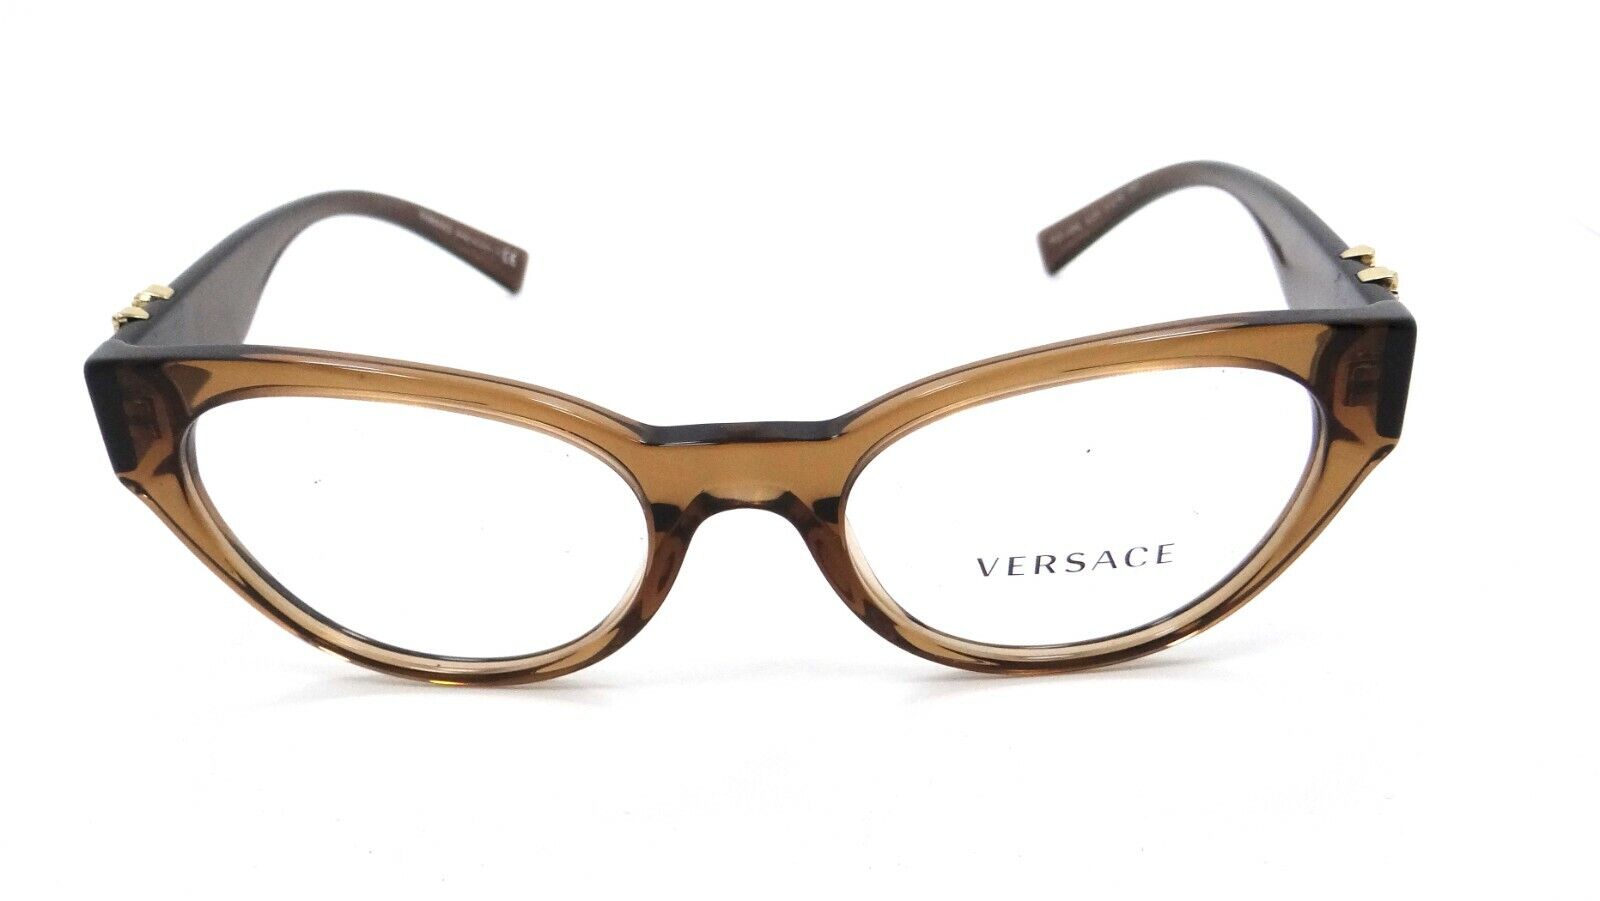 Versace Eyeglasses Frames VE 3282 5028 51-19-140 Transparent Brown Italy-8056597159654-classypw.com-1